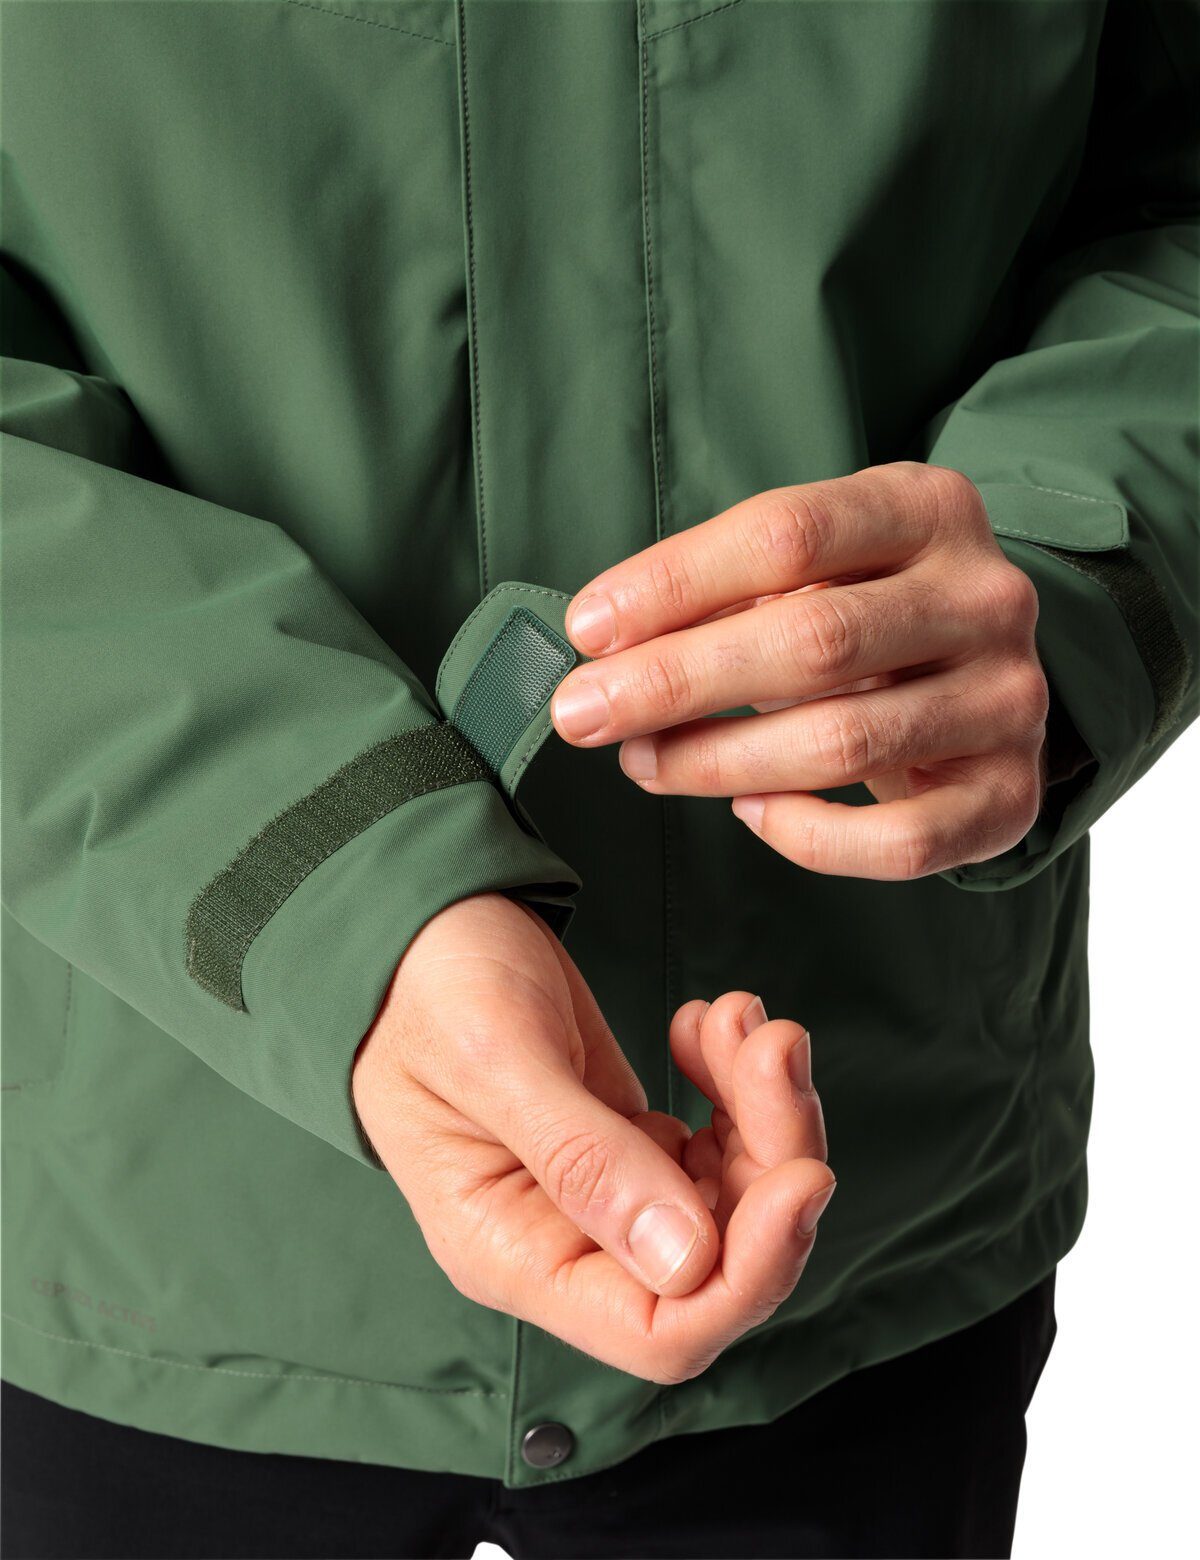 Padded Outdoorjacke kompensiert Men's Rosemoor (1-St) Klimaneutral VAUDE woodland Jacket